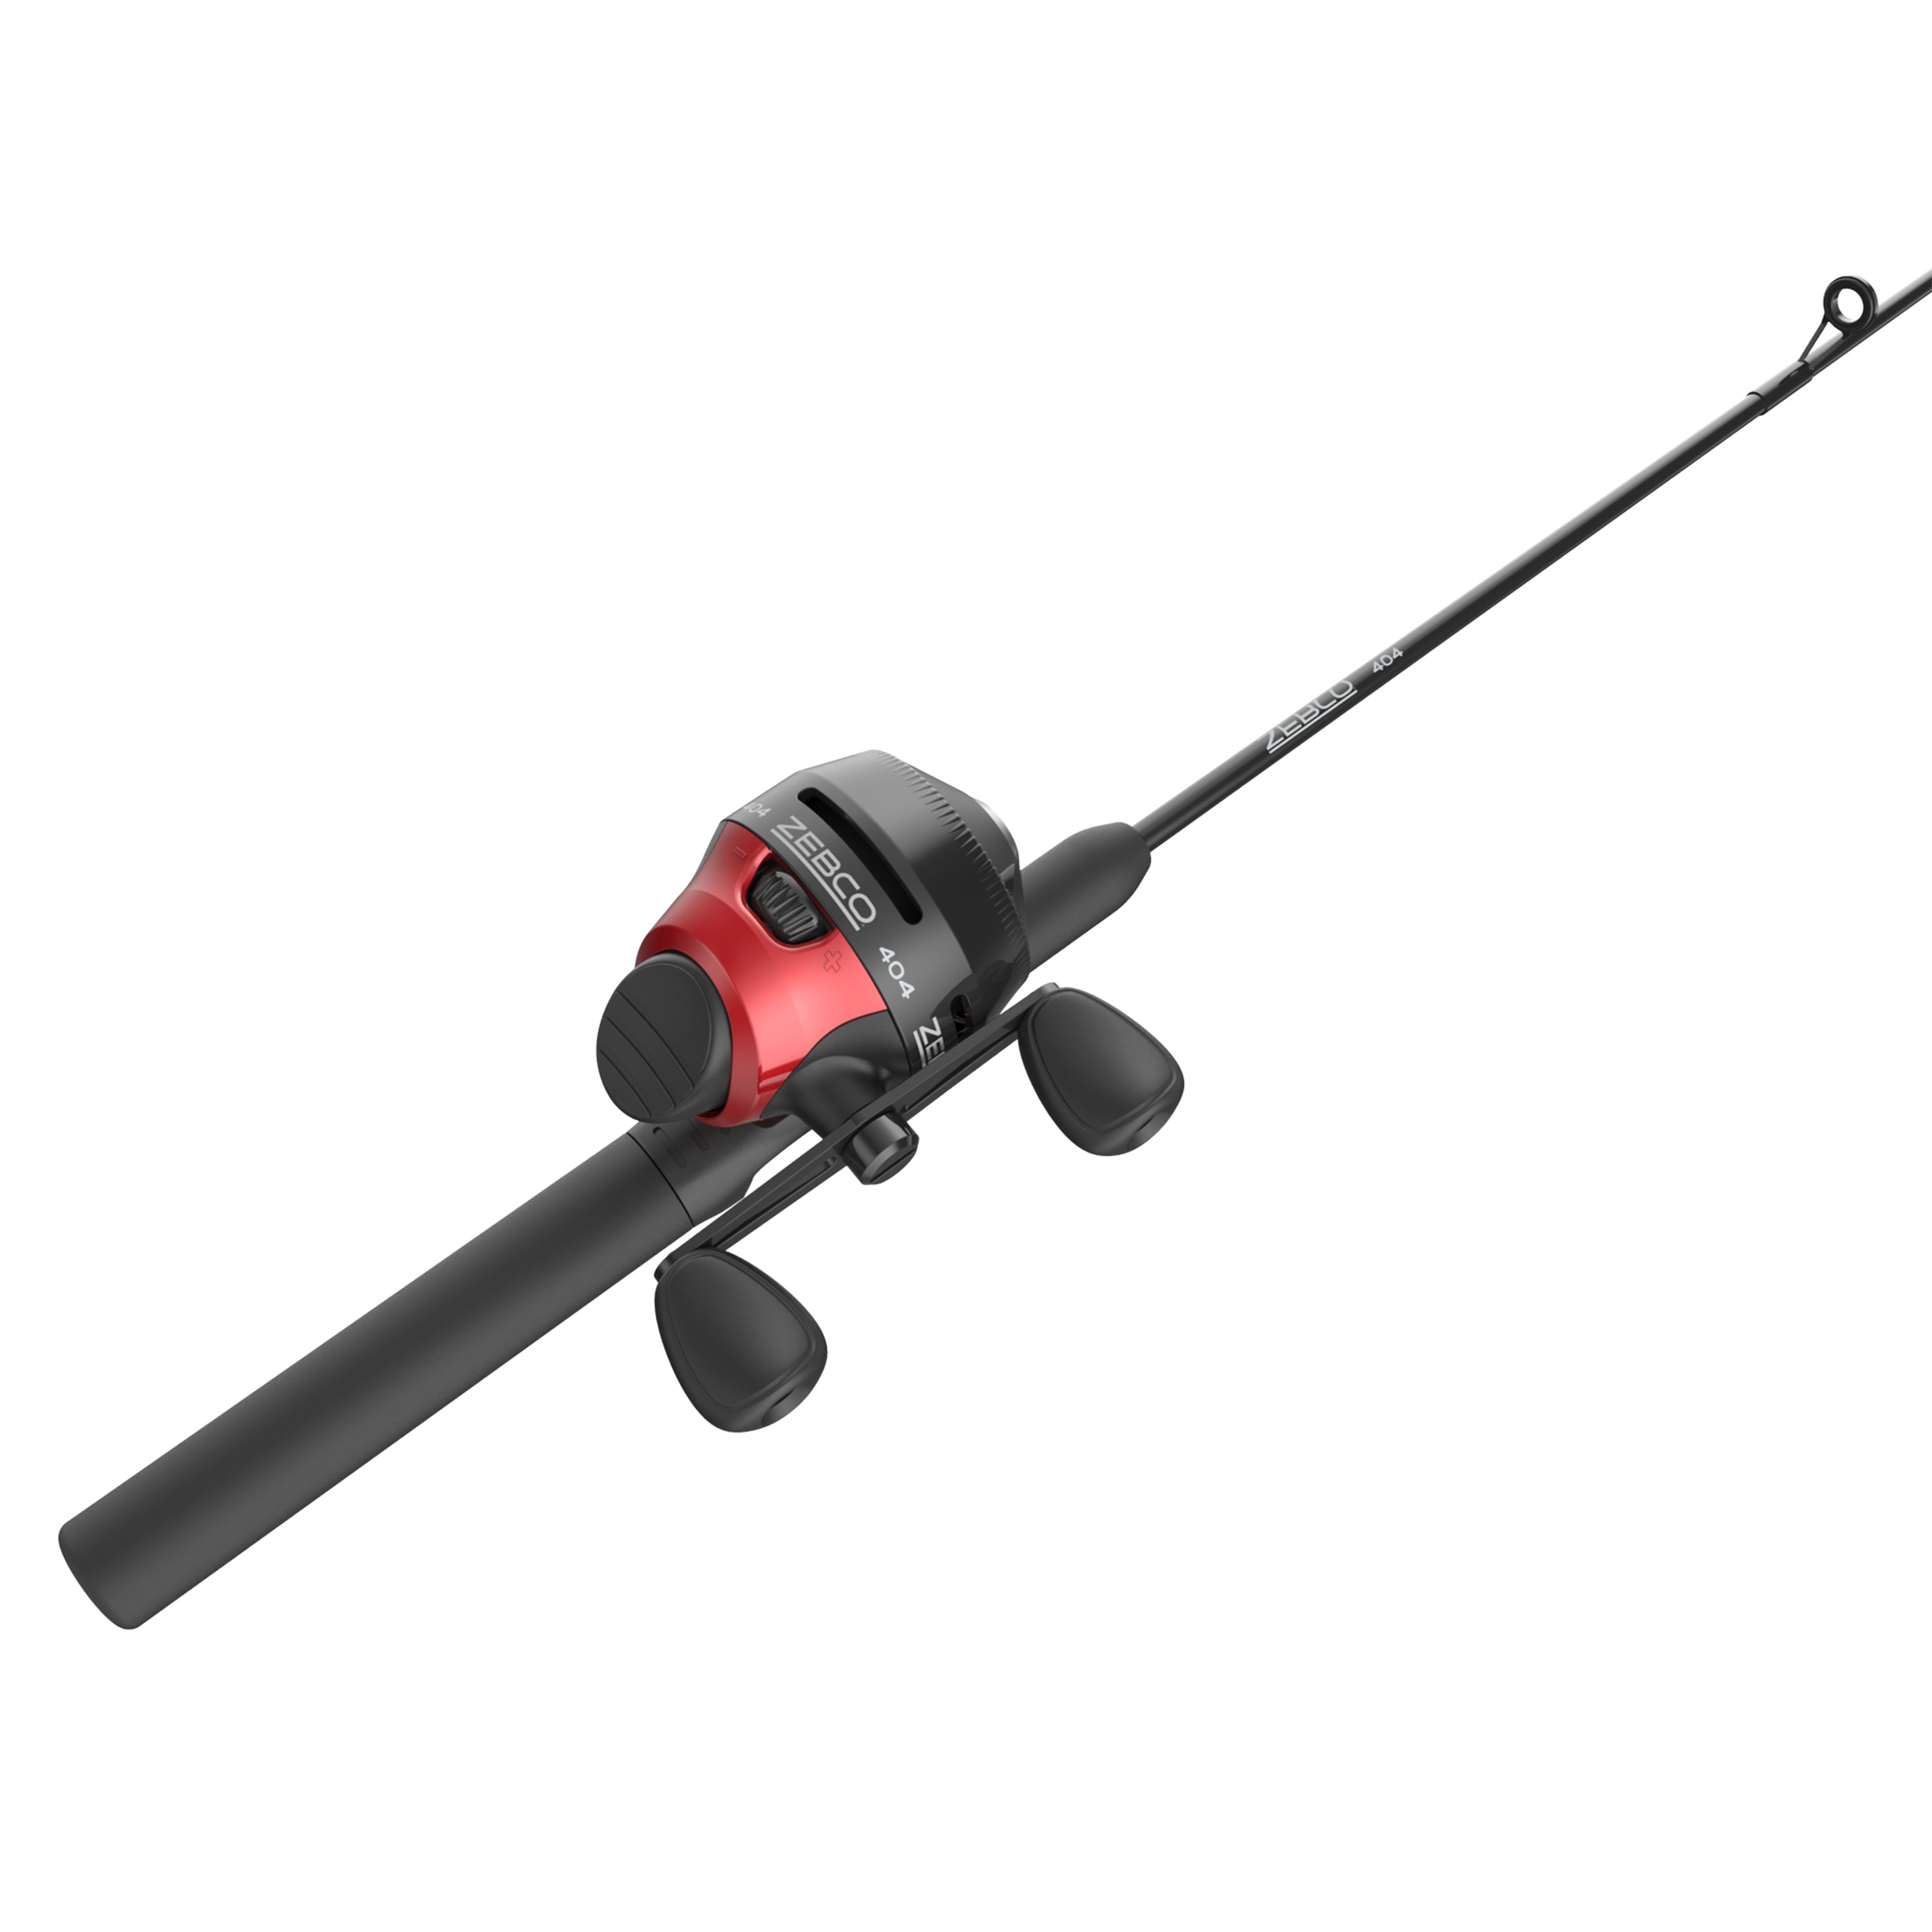 Zebco 404 Spincast Reel 2.8:1 15lb Test MBK404 - Fishingurus Angler's  International Resources